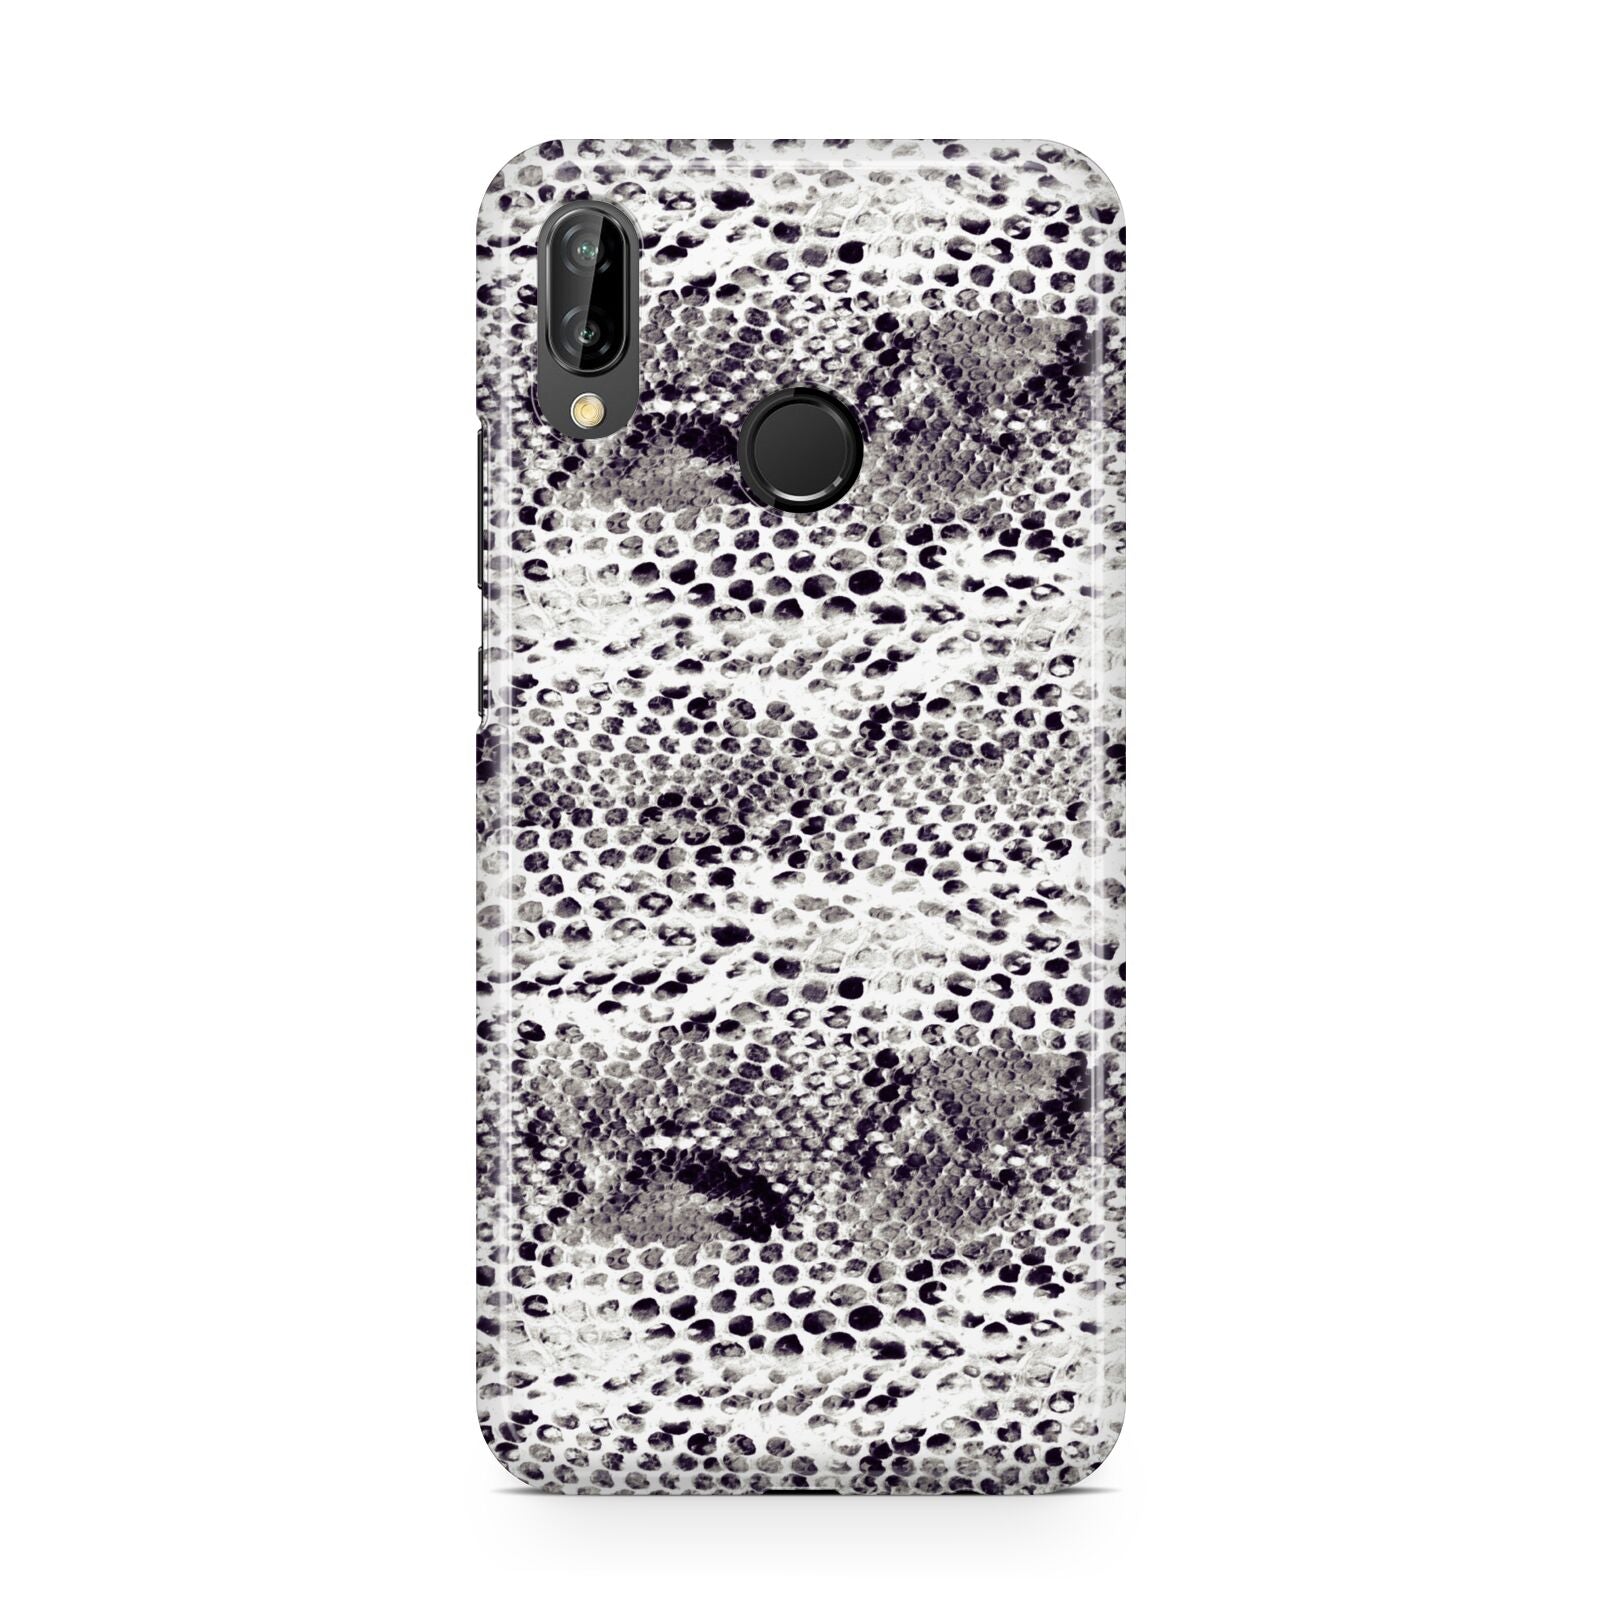 Textured Snakeskin Huawei P20 Lite Phone Case